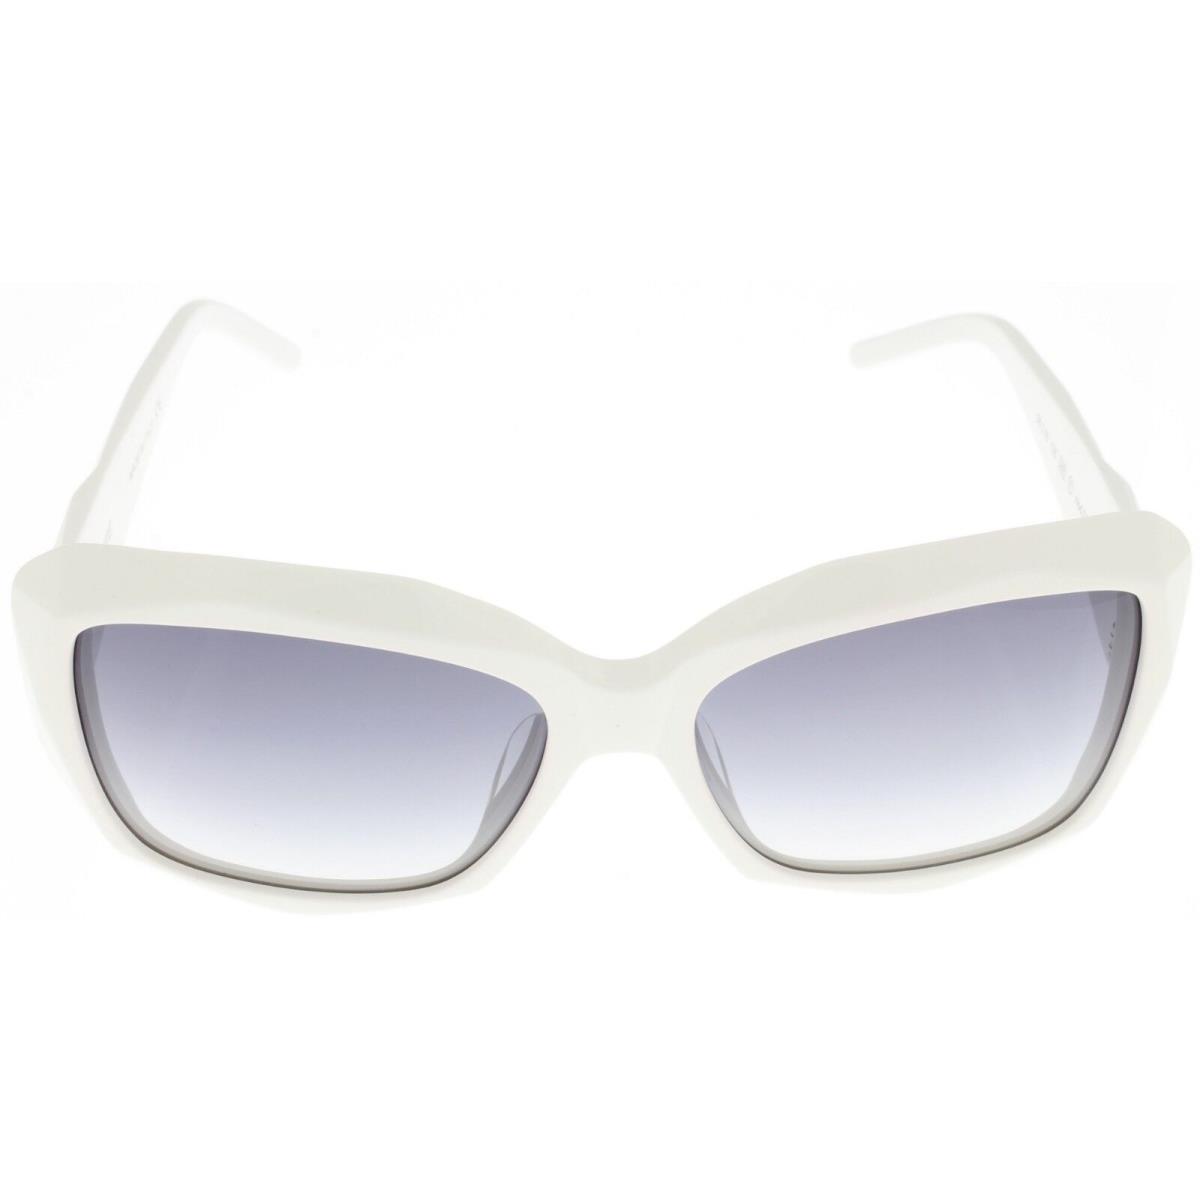 Gianfranco Ferre Sunglasses Women White Ivory Rectangular GF928 04